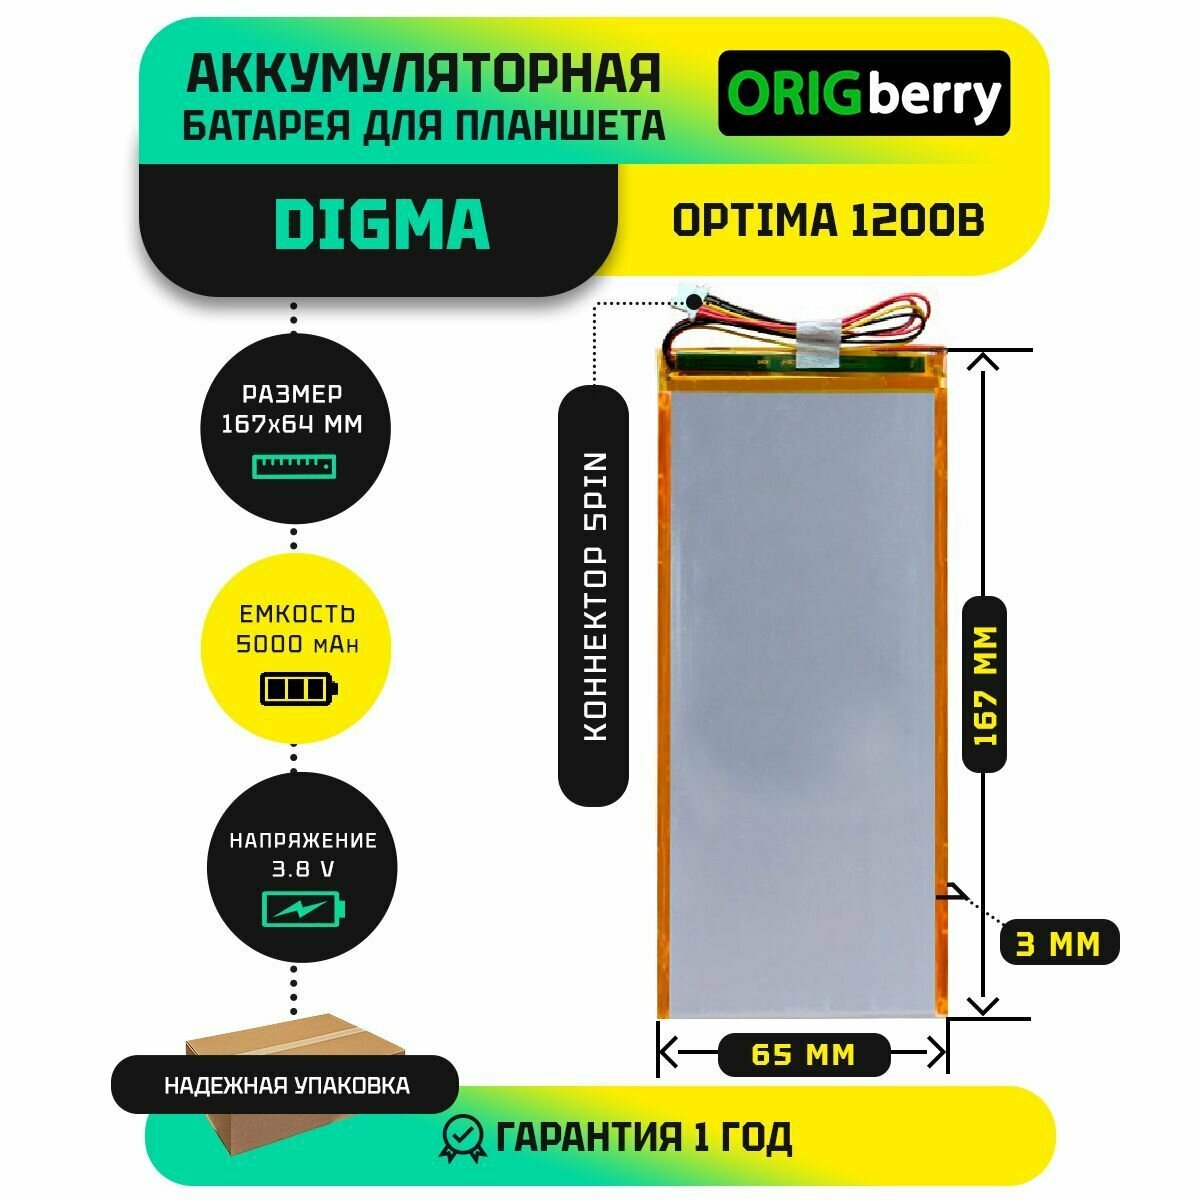 Аккумулятор для планшета Digma Optima 1200B 38 V / 5000 mAh / 167мм x 65мм / коннектор 5 PIN